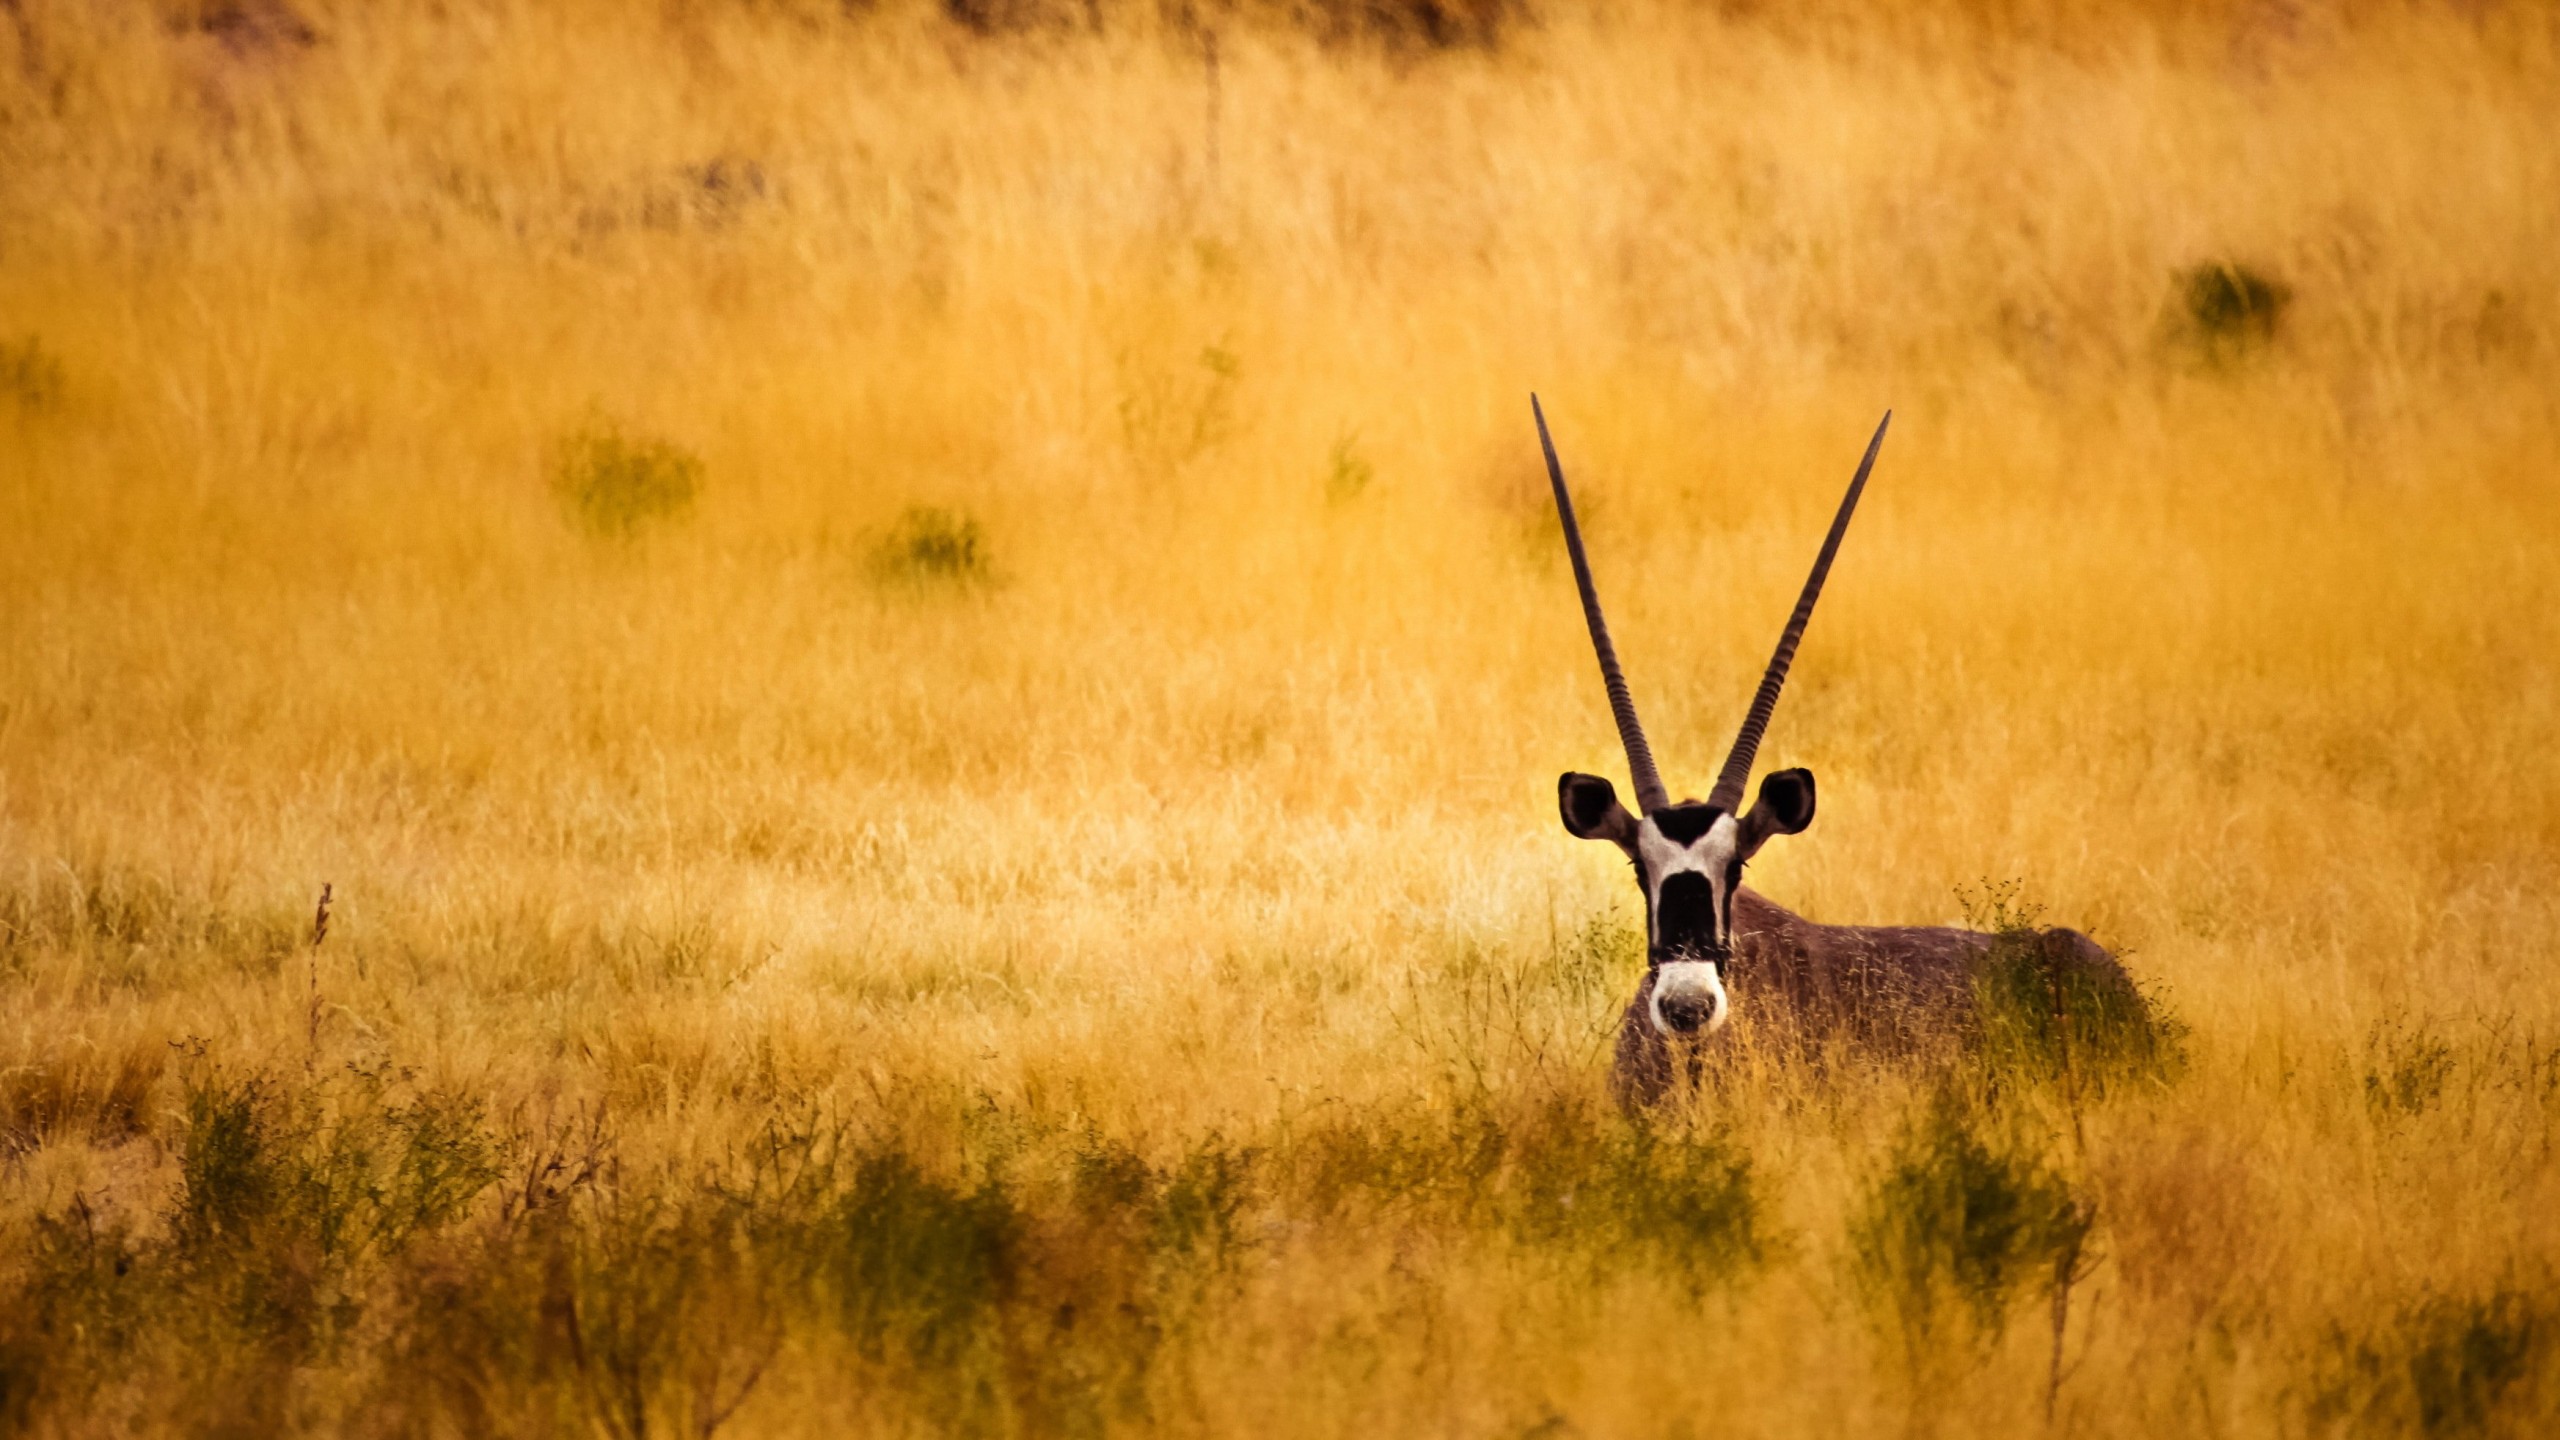 Antelope In The Savanna Wallpaper for Desktop 2560x1440